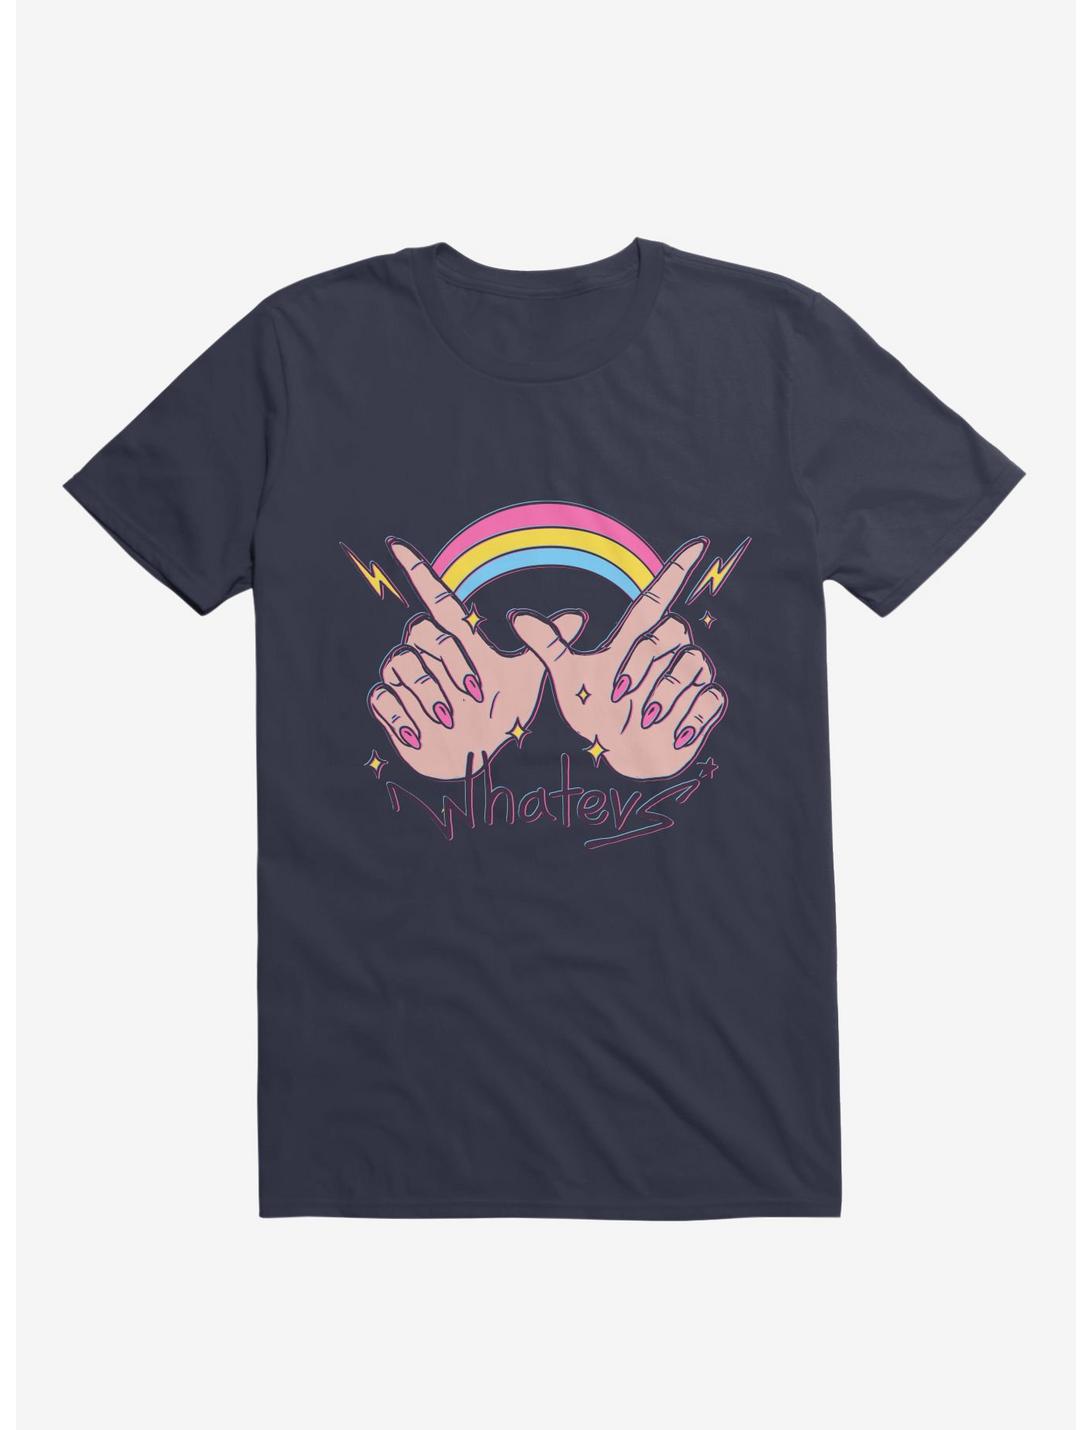 Rainbow Whatevs! Navy Blue T-Shirt, NAVY, hi-res